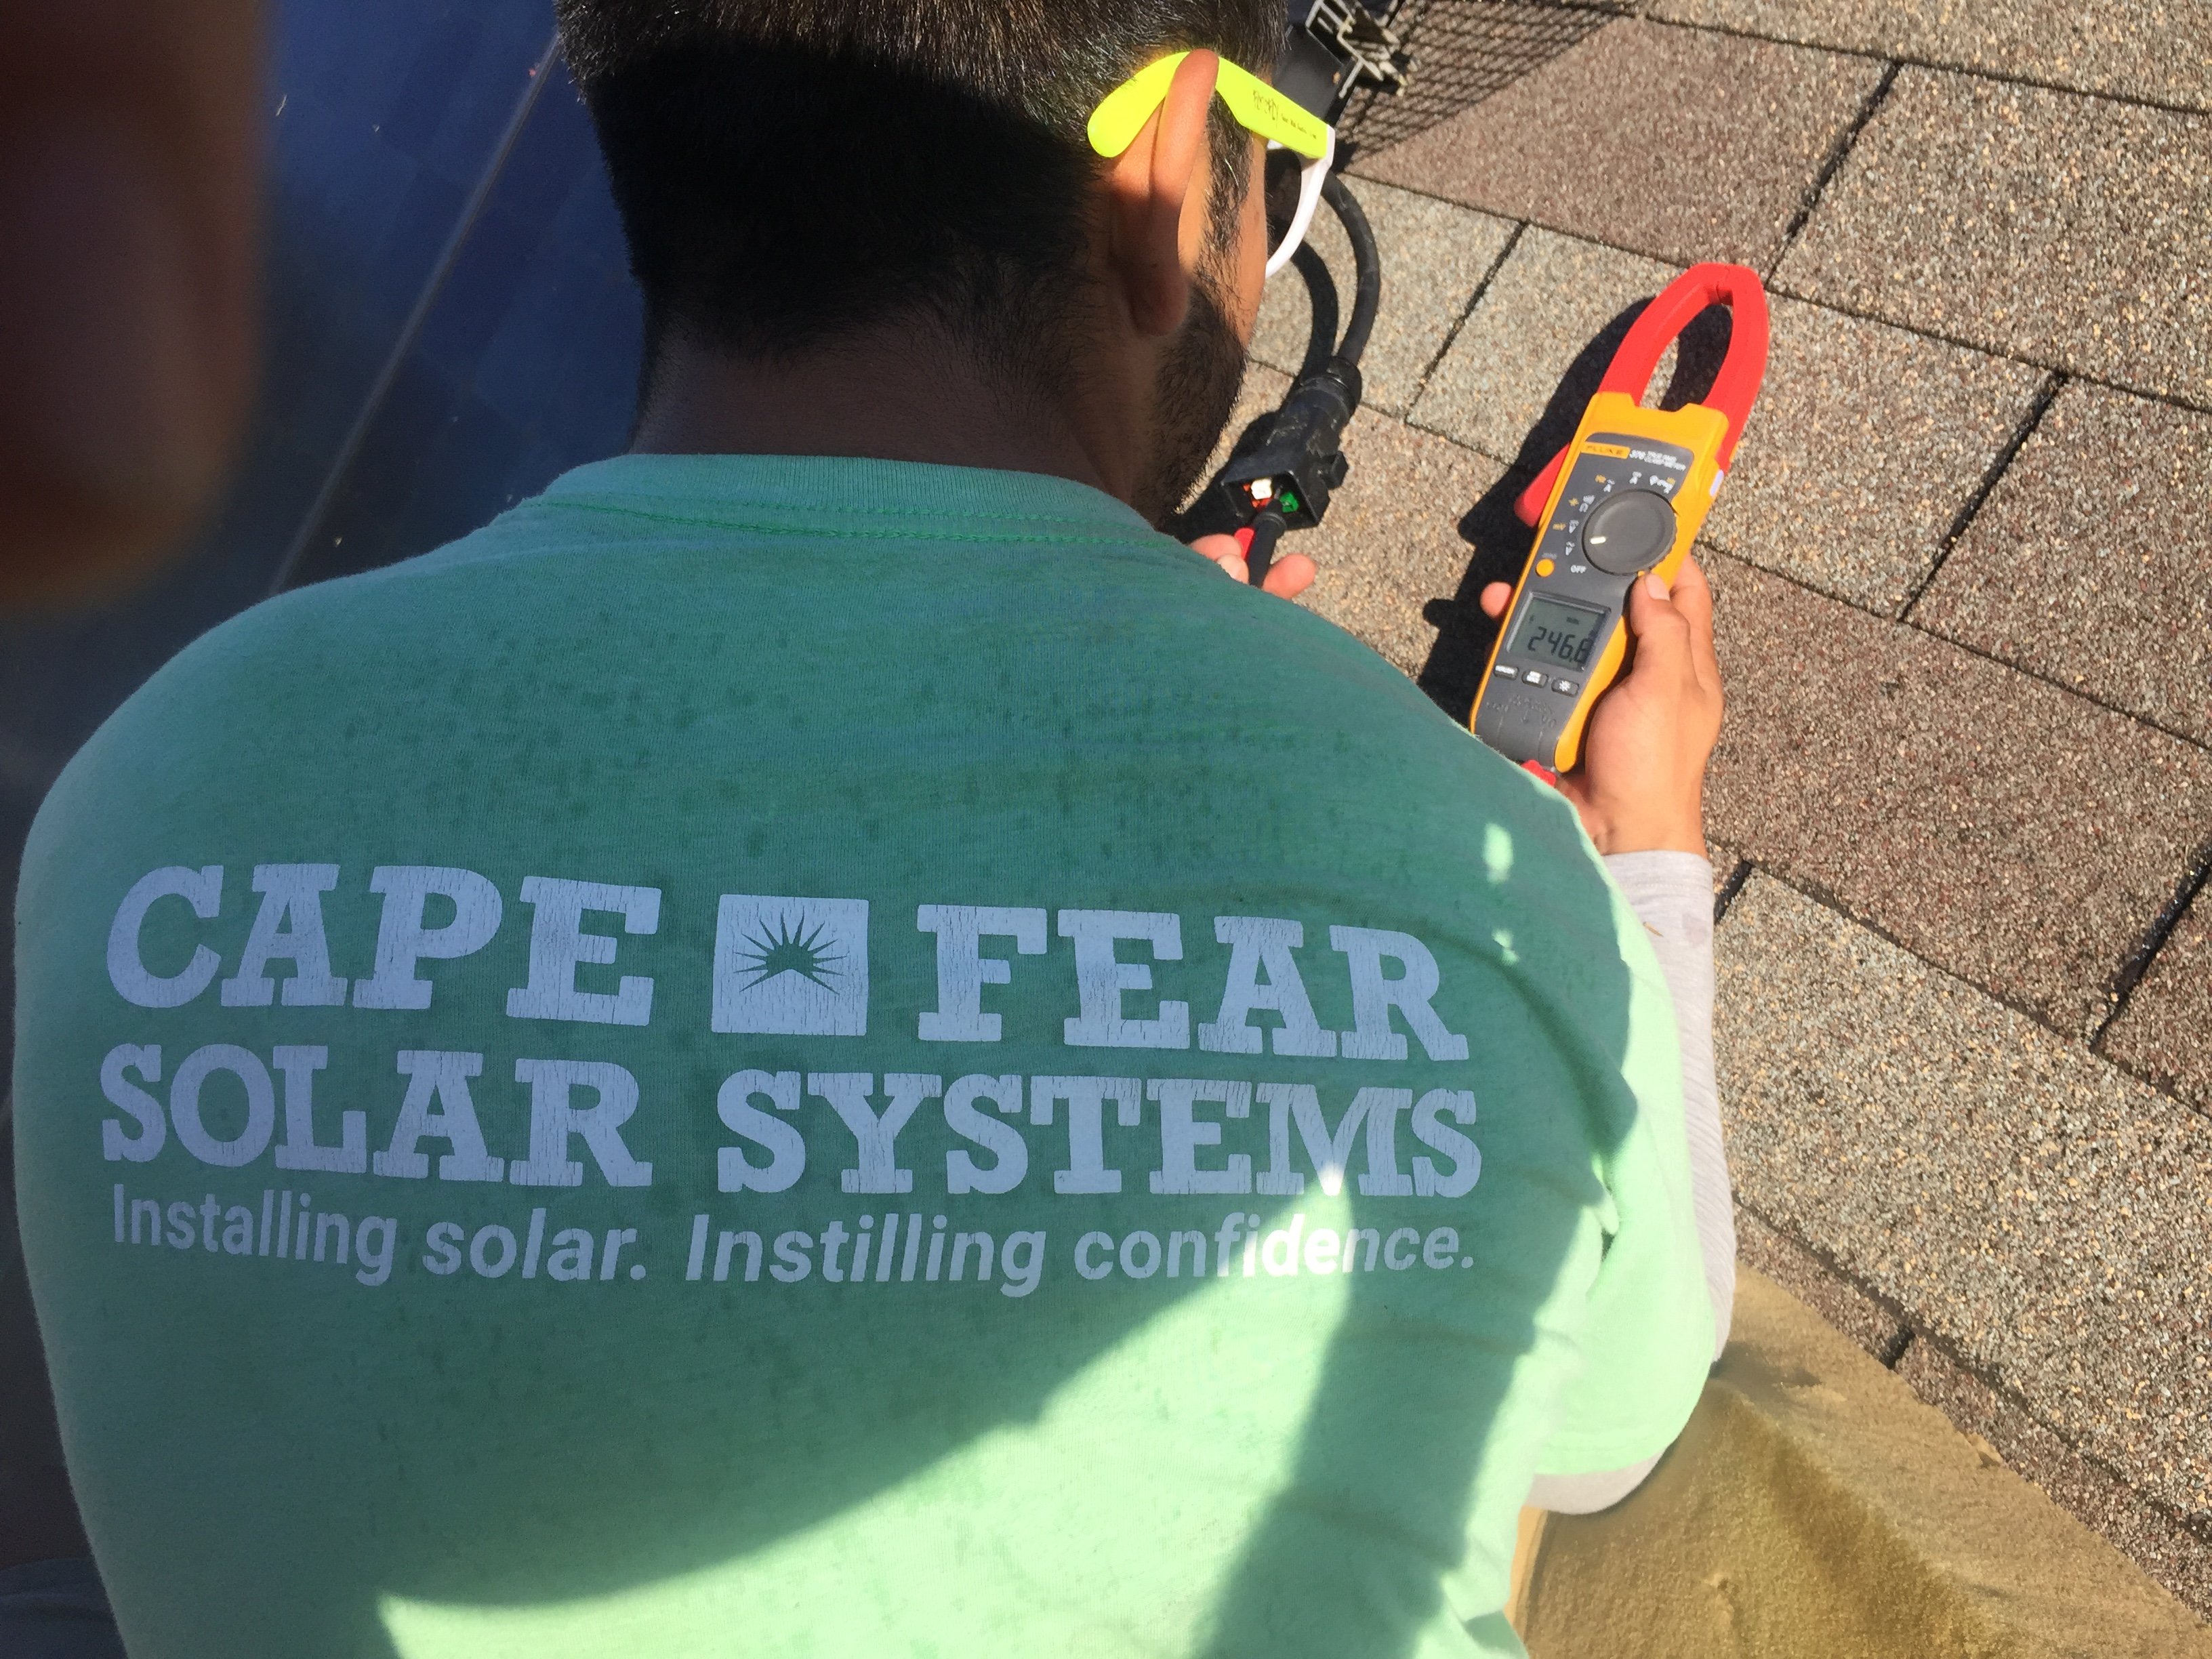 Image courtesy Cape Fear Solar Systems